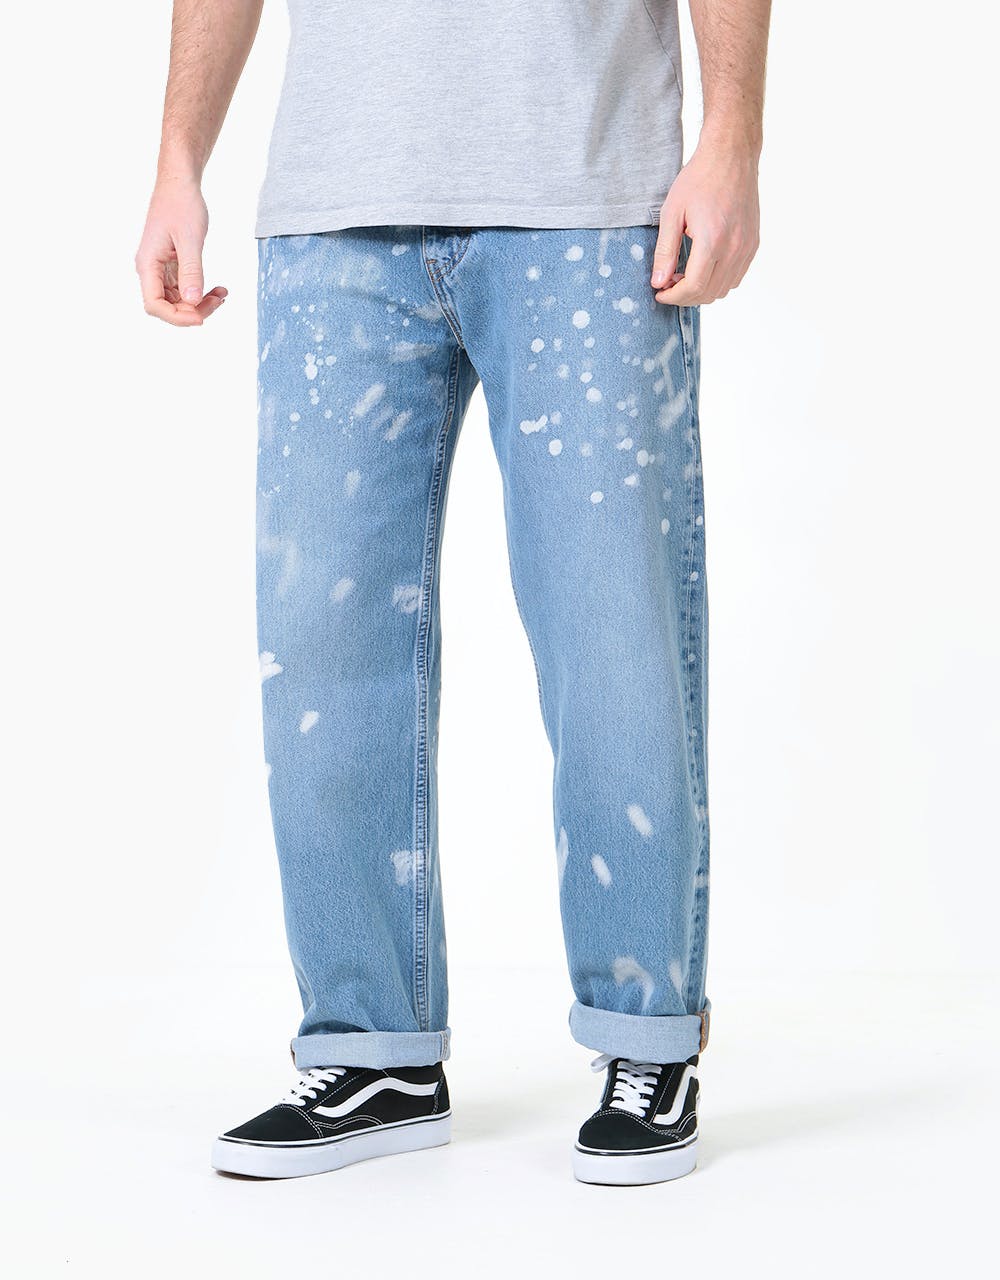 Levi's Skateboarding Baggy 5 Pocket Denim Jeans - S&E Jackson